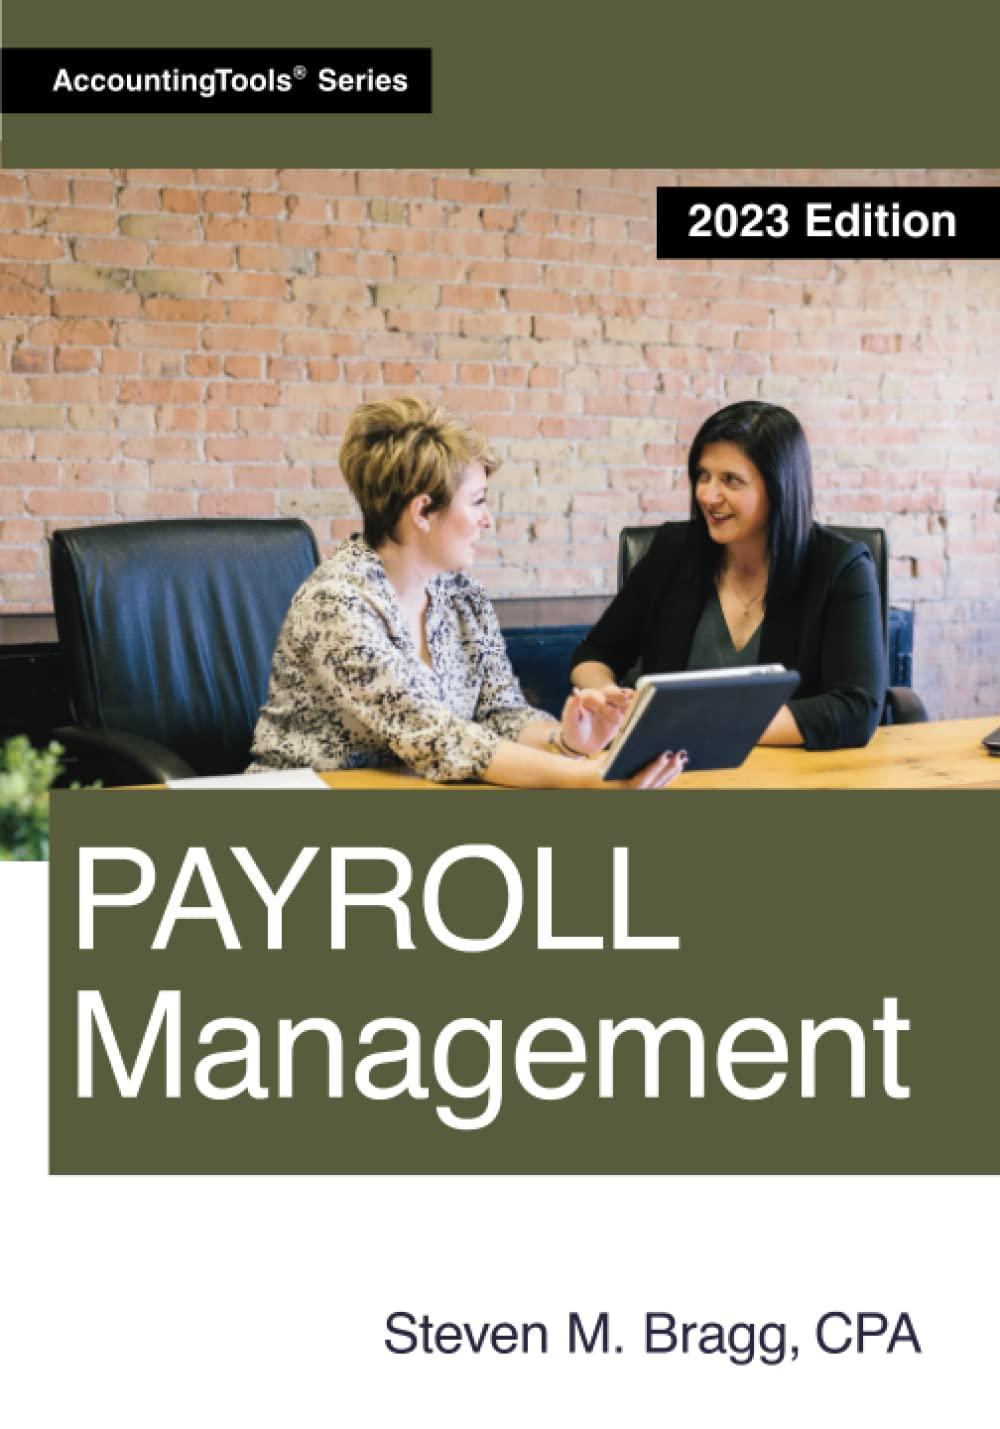 payroll management 2023rd edition steven m. bragg 1642210978, 978-1642210972